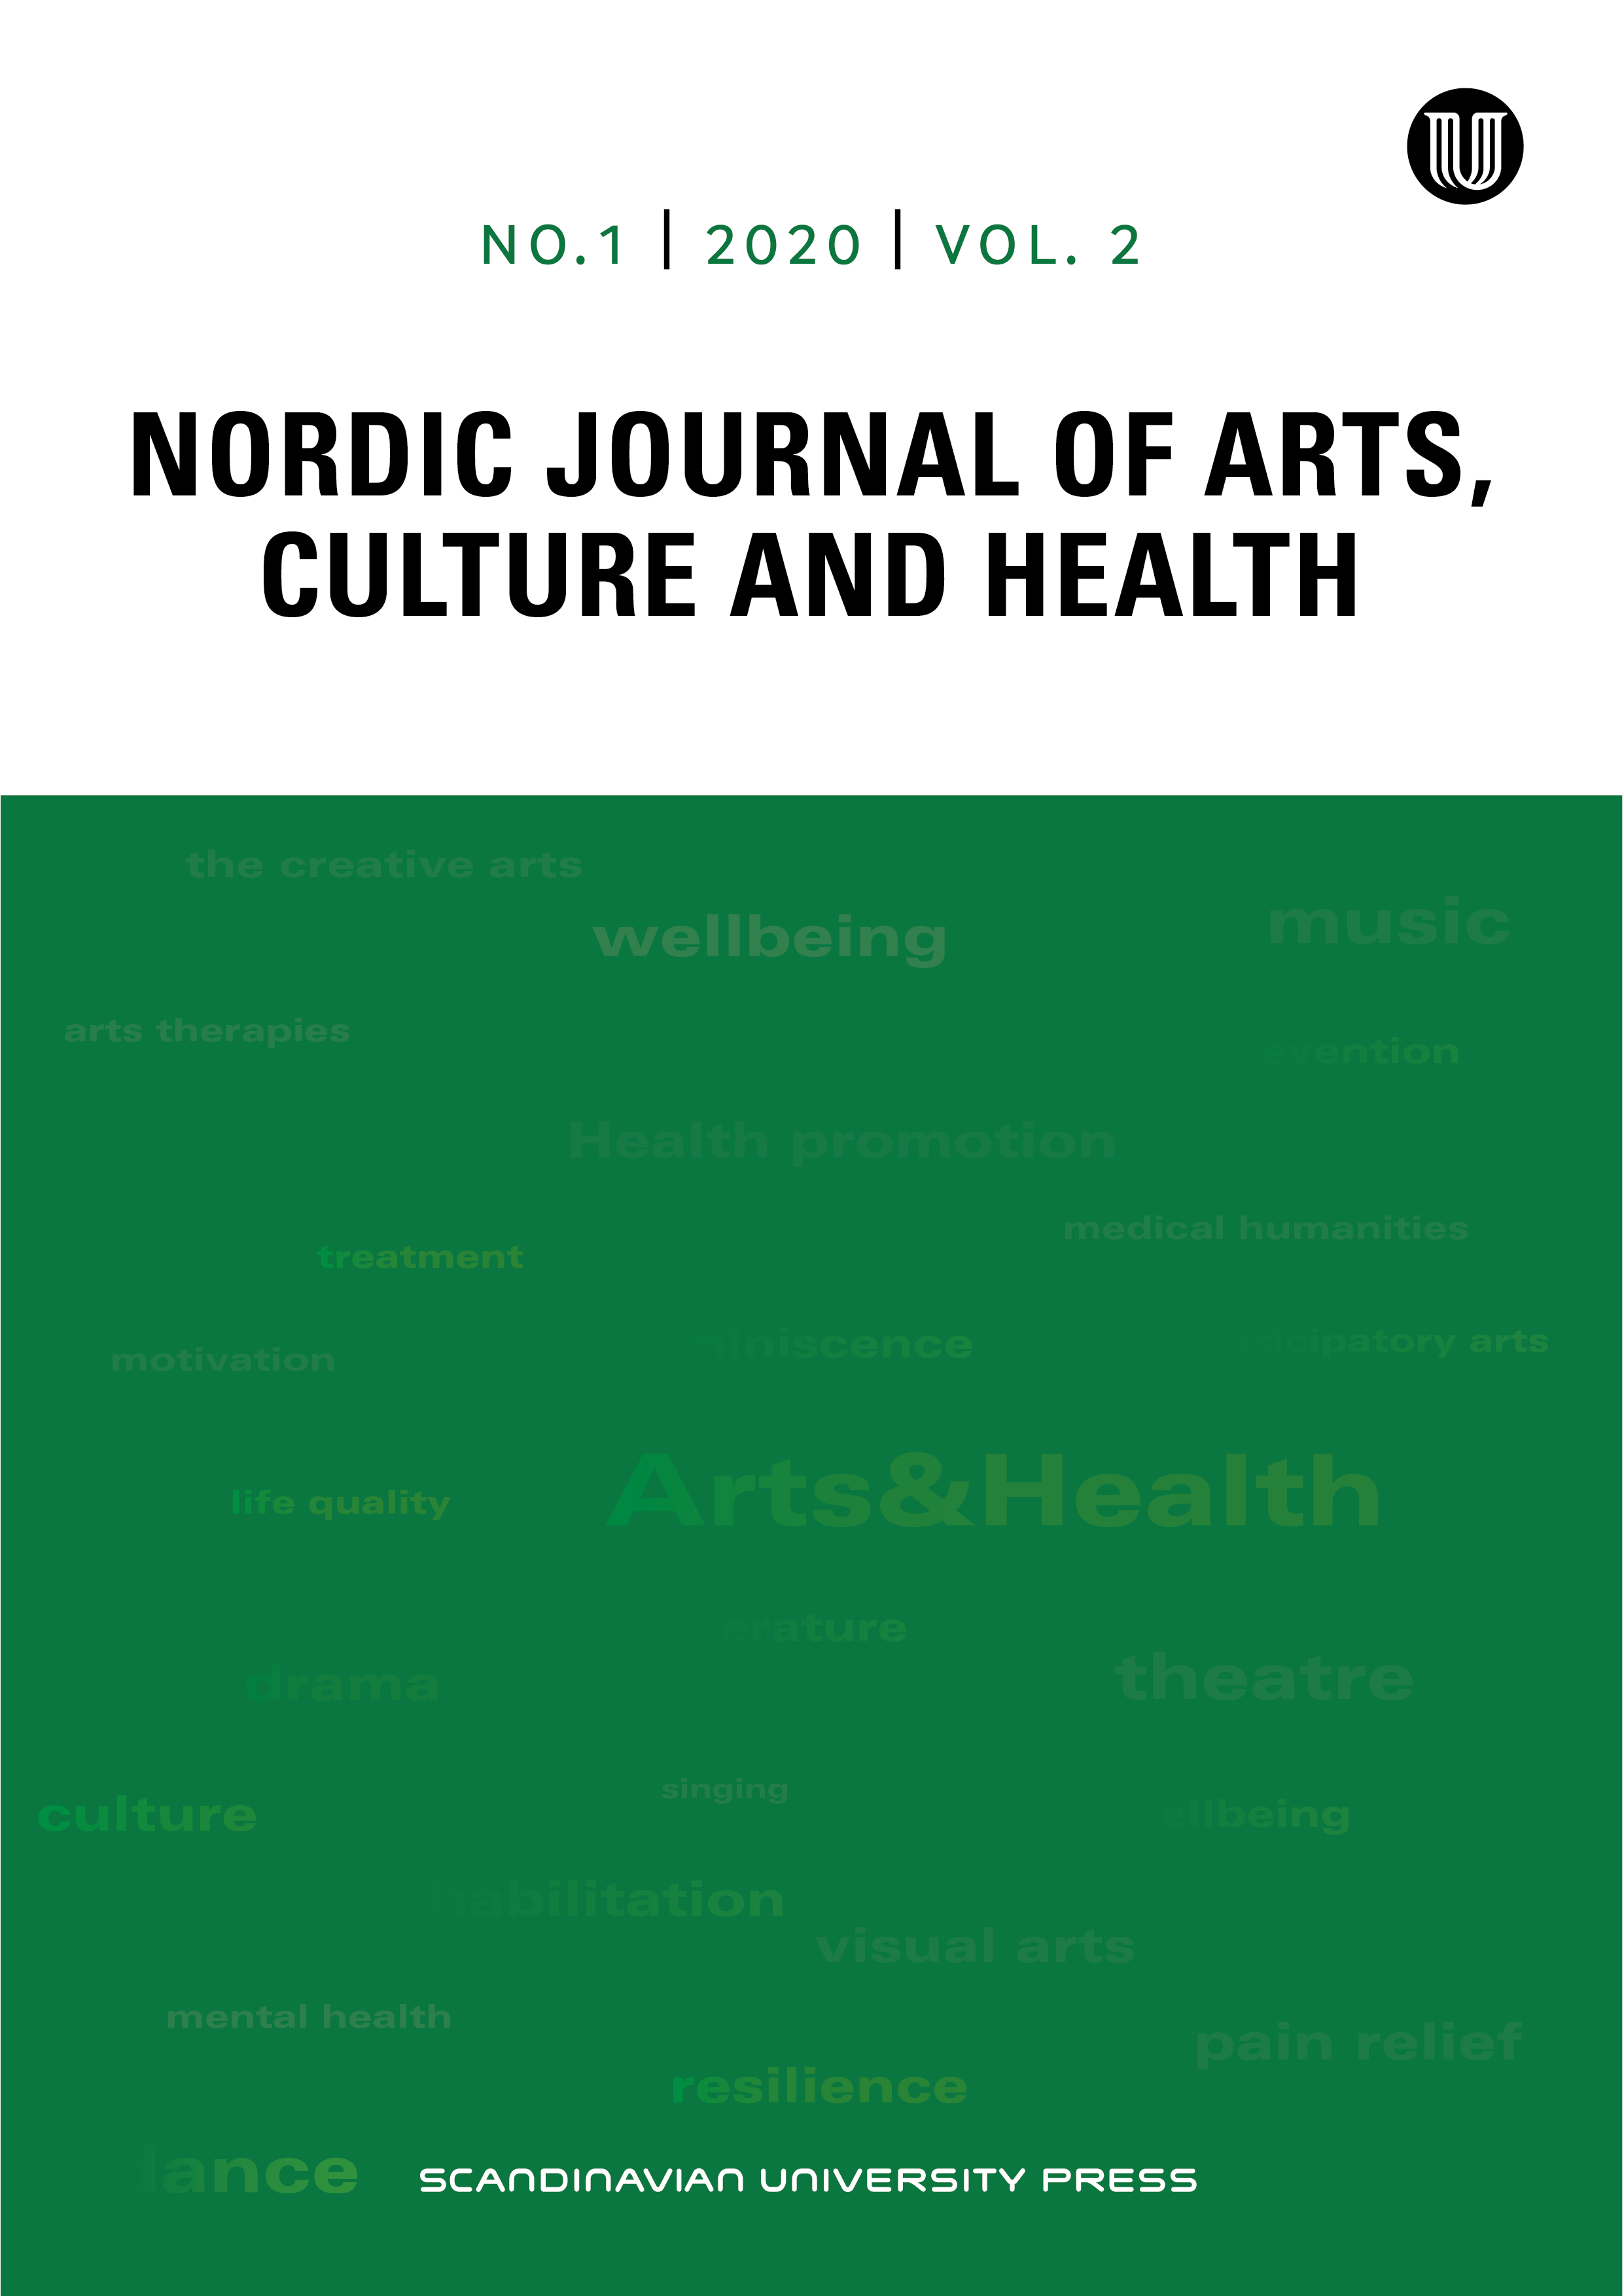 Forsiden af 'Nordic journal of arts, culture and health vol 2'